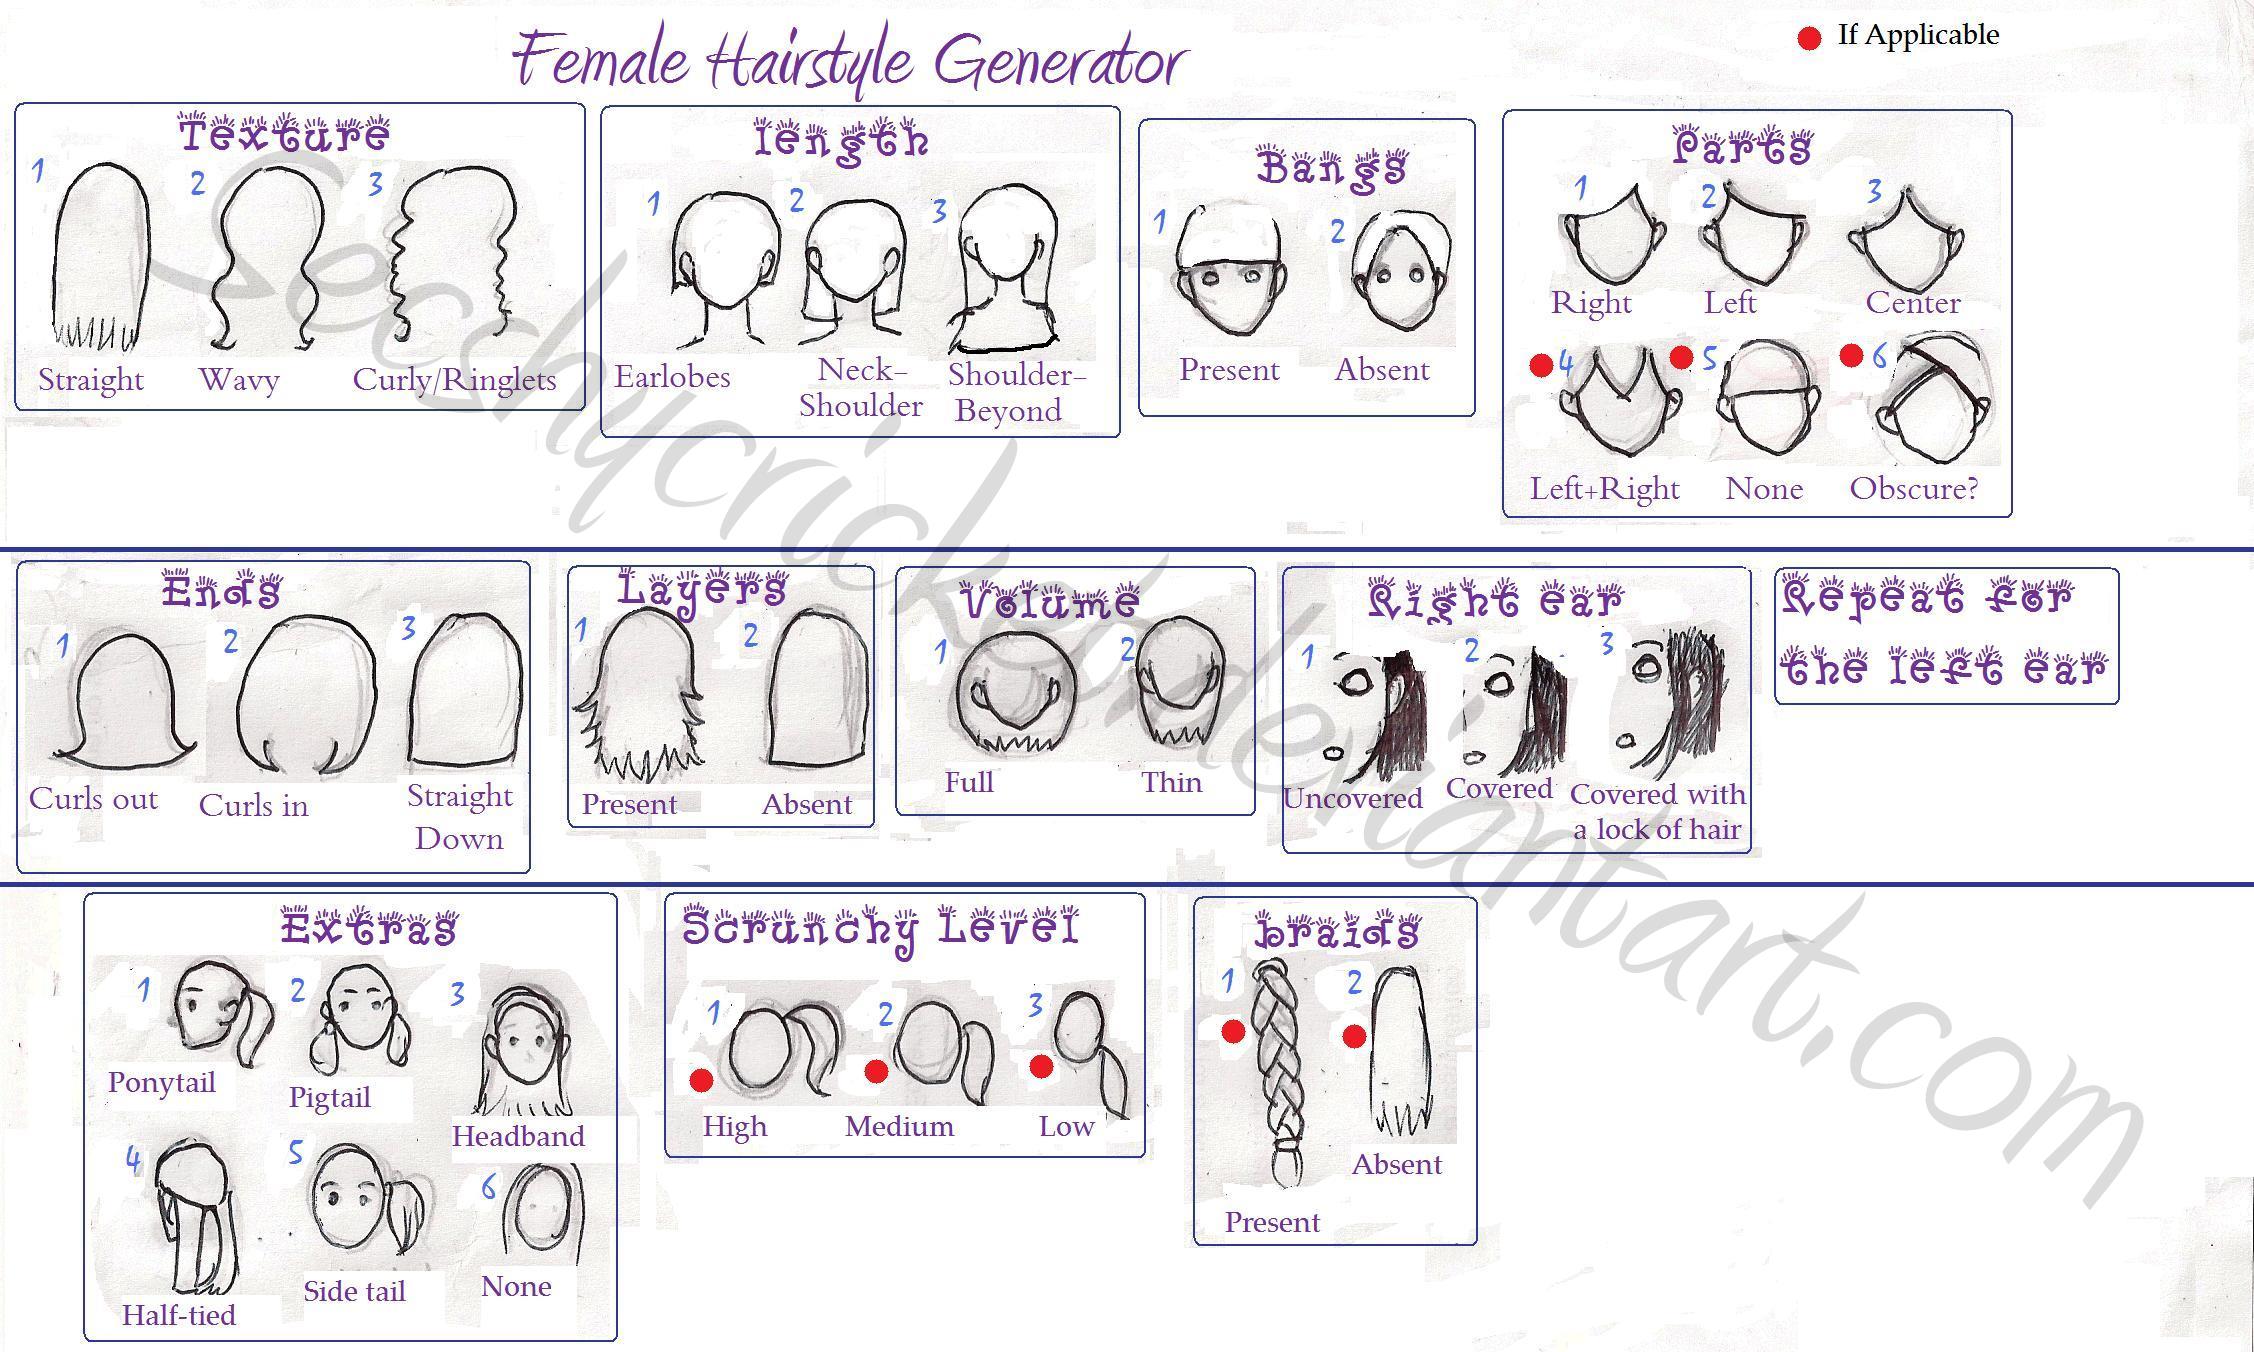 Hairstyle Generator Part 1 by Picklechippy on DeviantArt